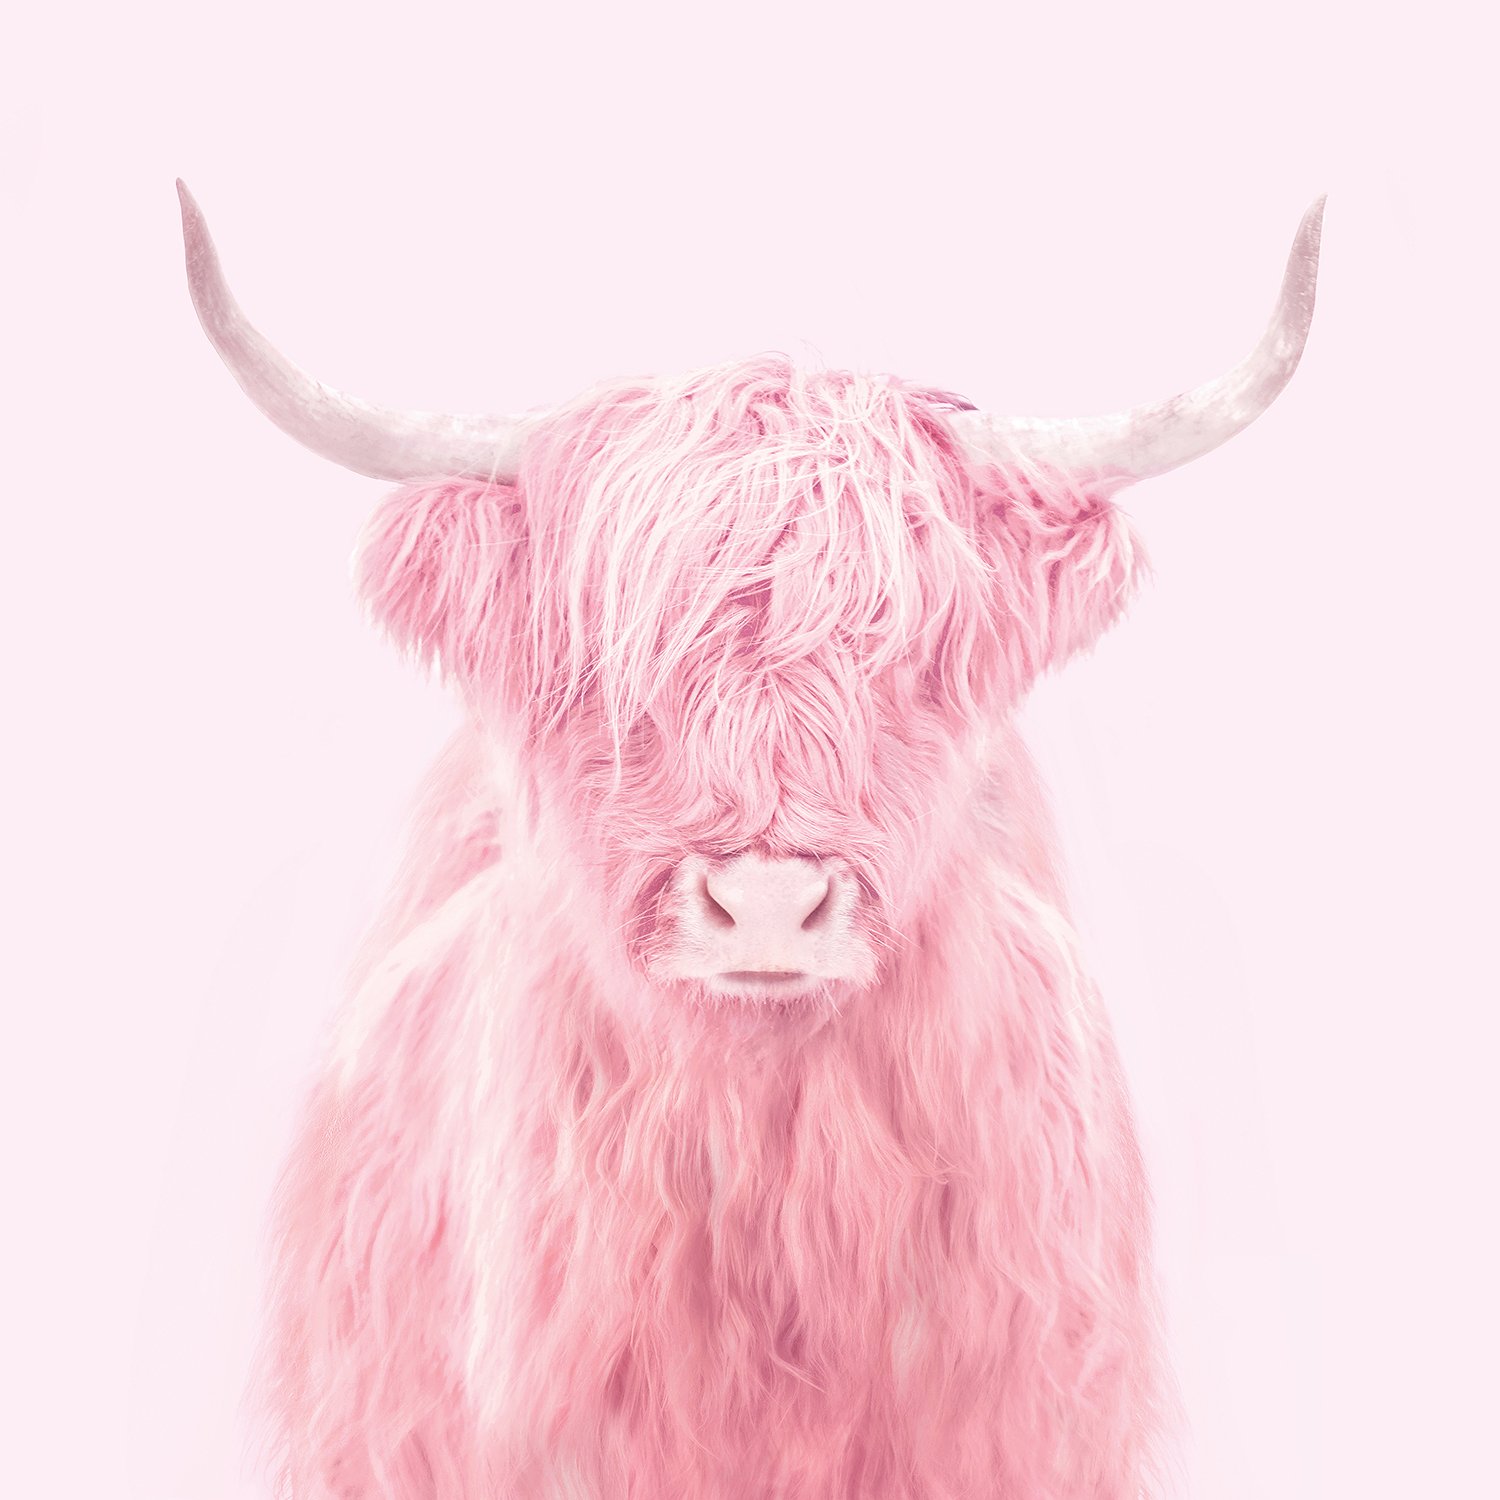 Розовая корова обои - картинки, фото и рисунки.